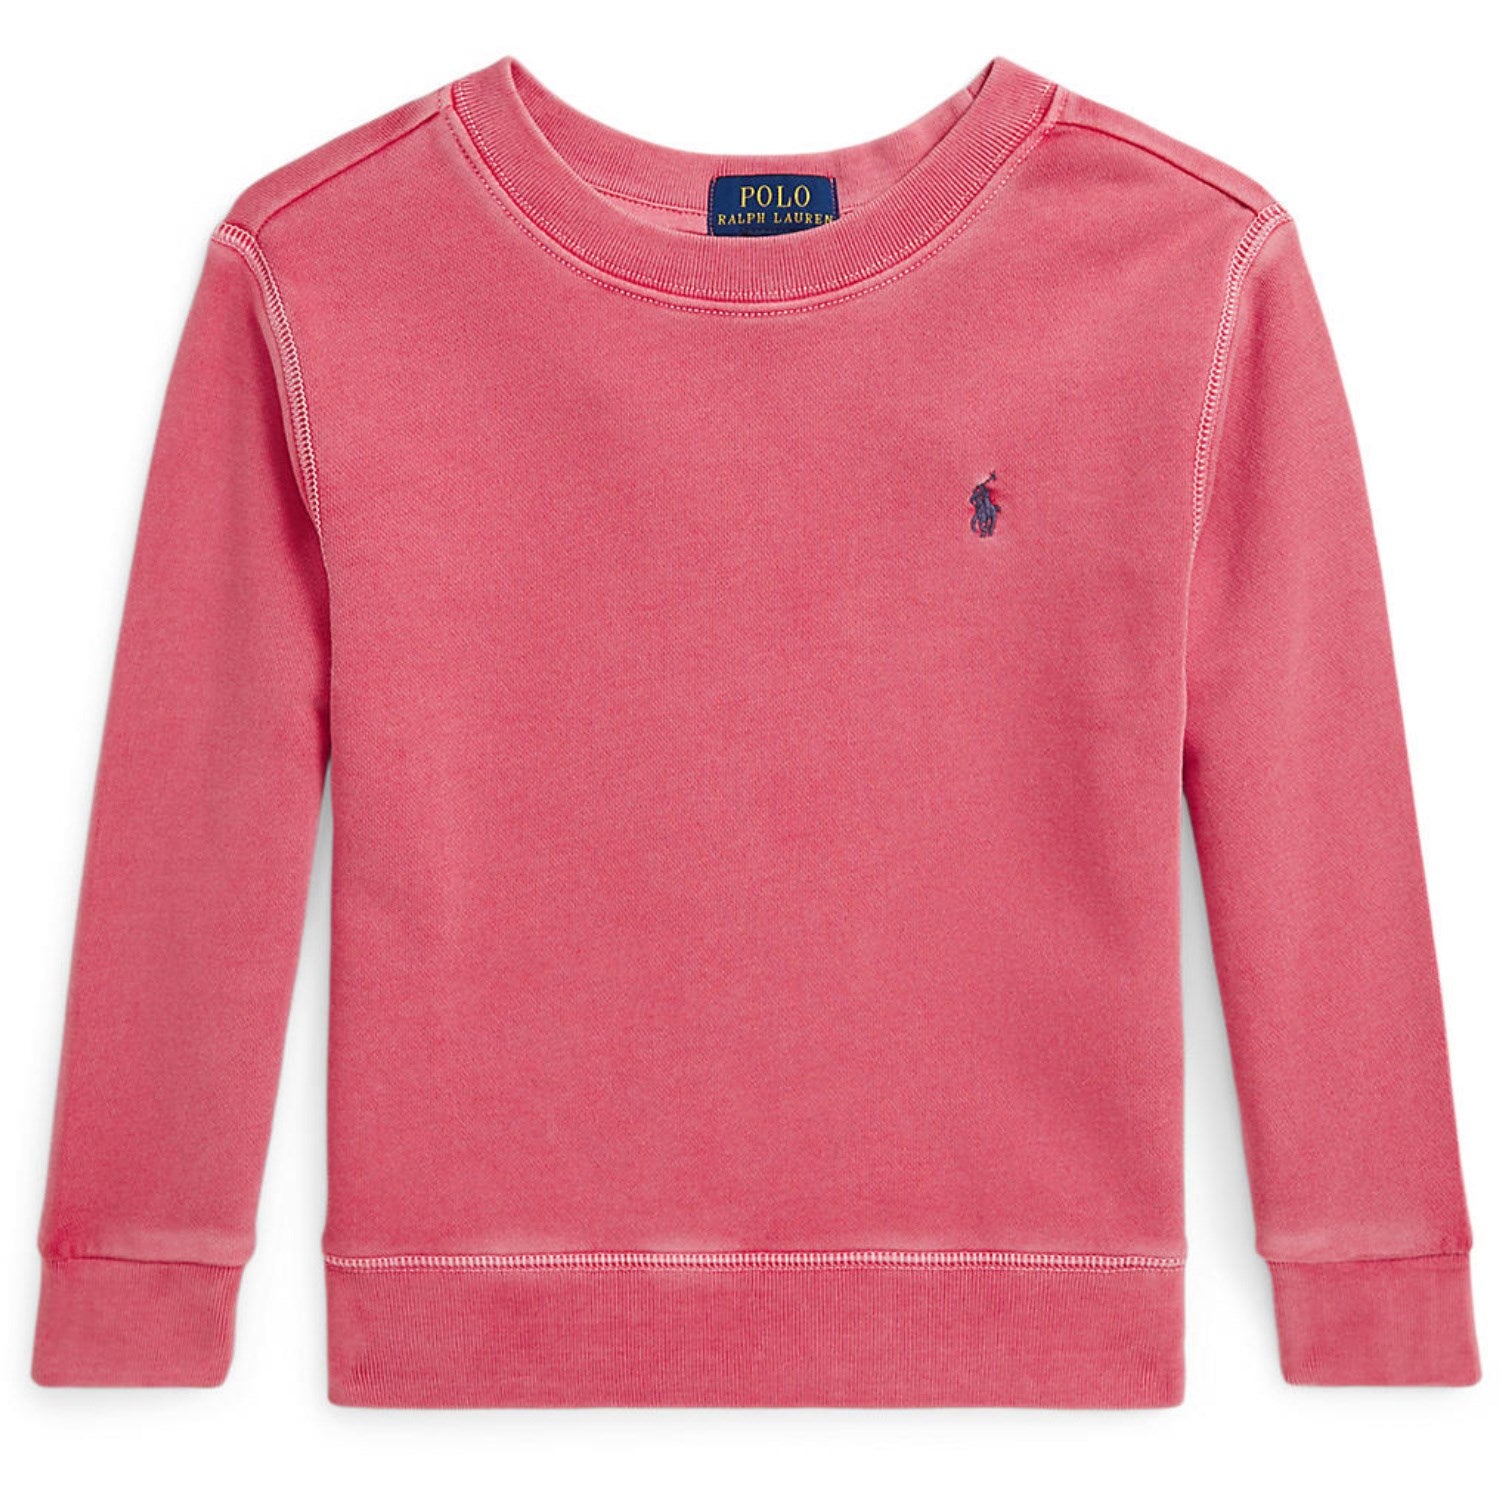 Polo Ralph Lauren Adirondack Berry Sweatshirt